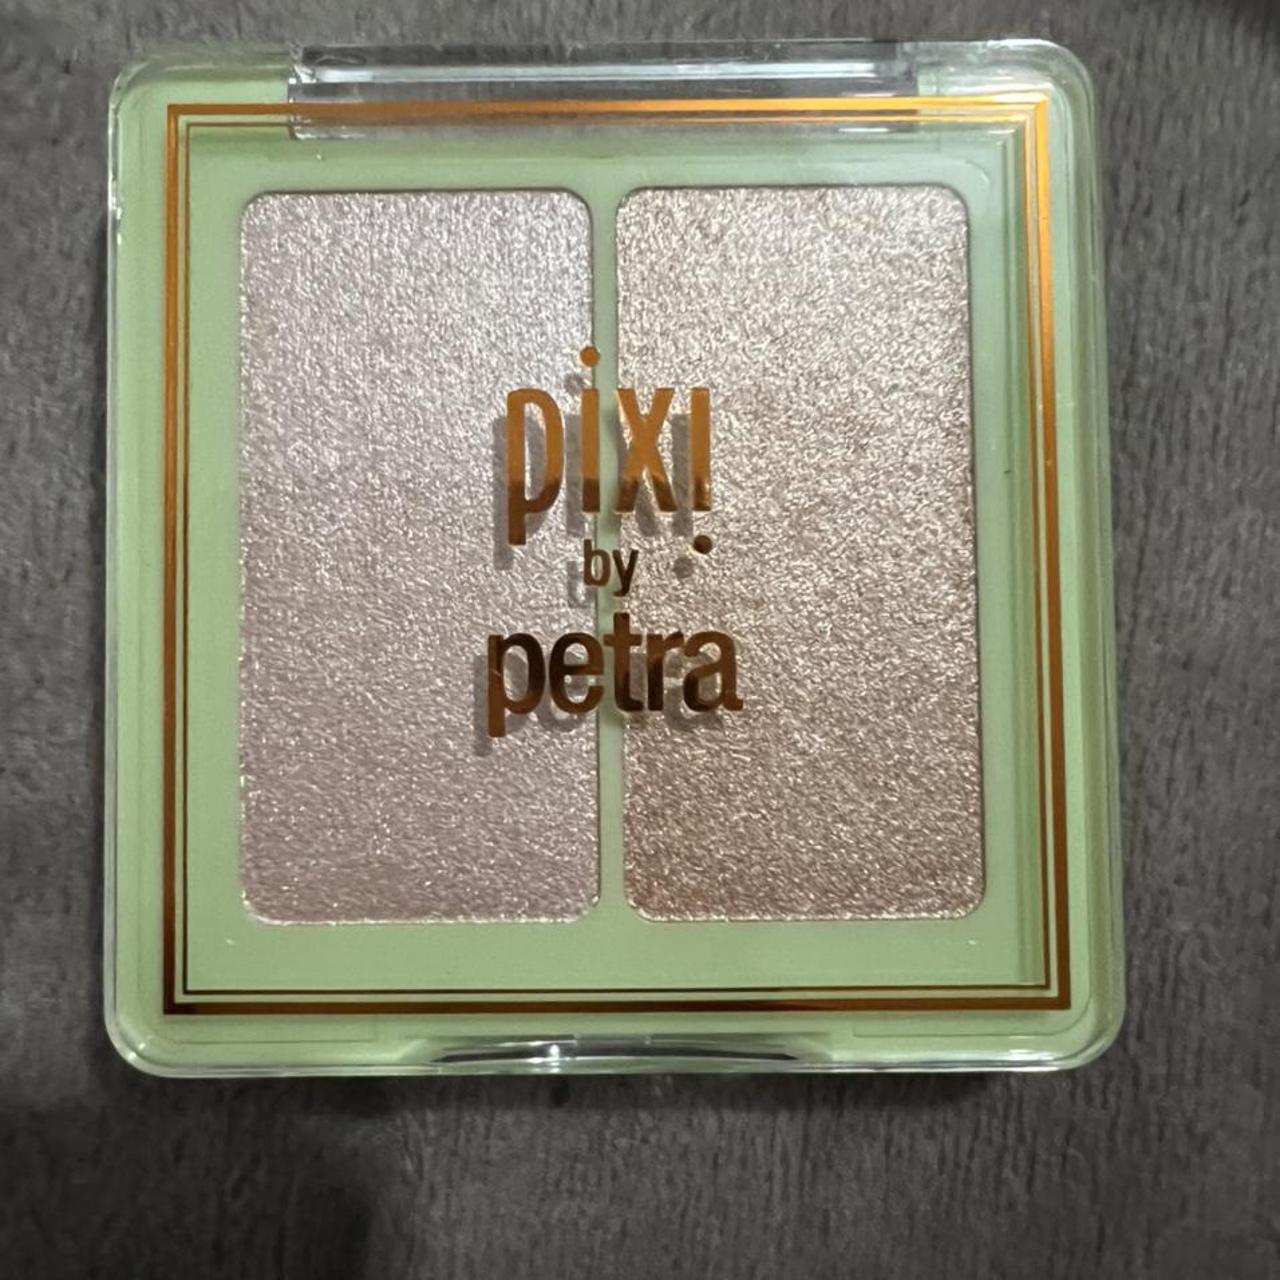 Pixi Multi Makeup Depop